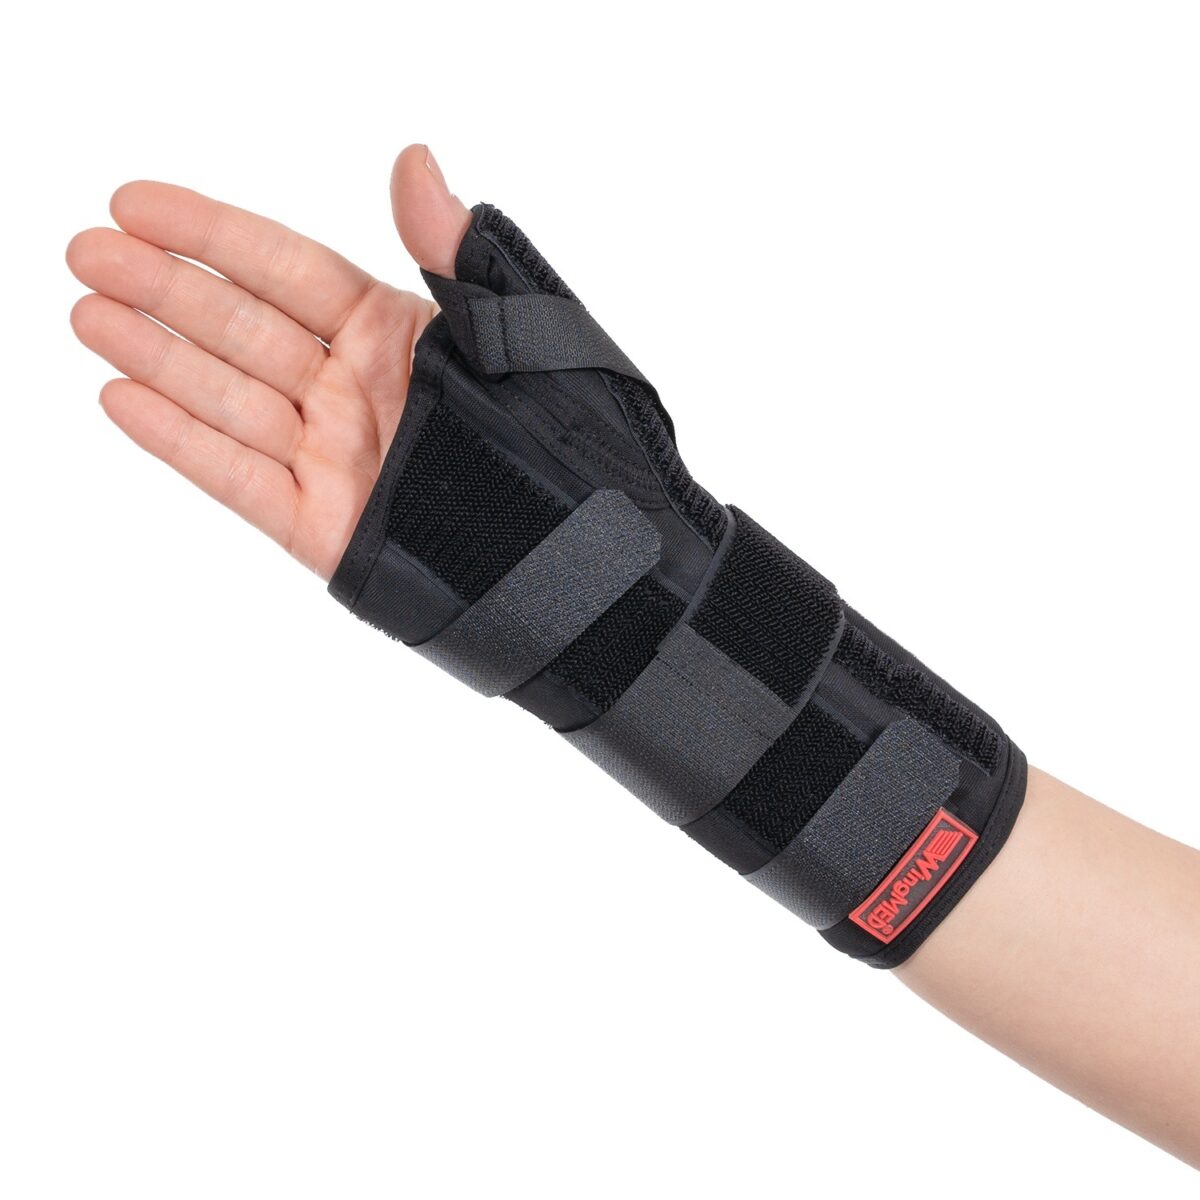 wingmed orthopedic equipments W322 wrist splint with thumb support plus 77